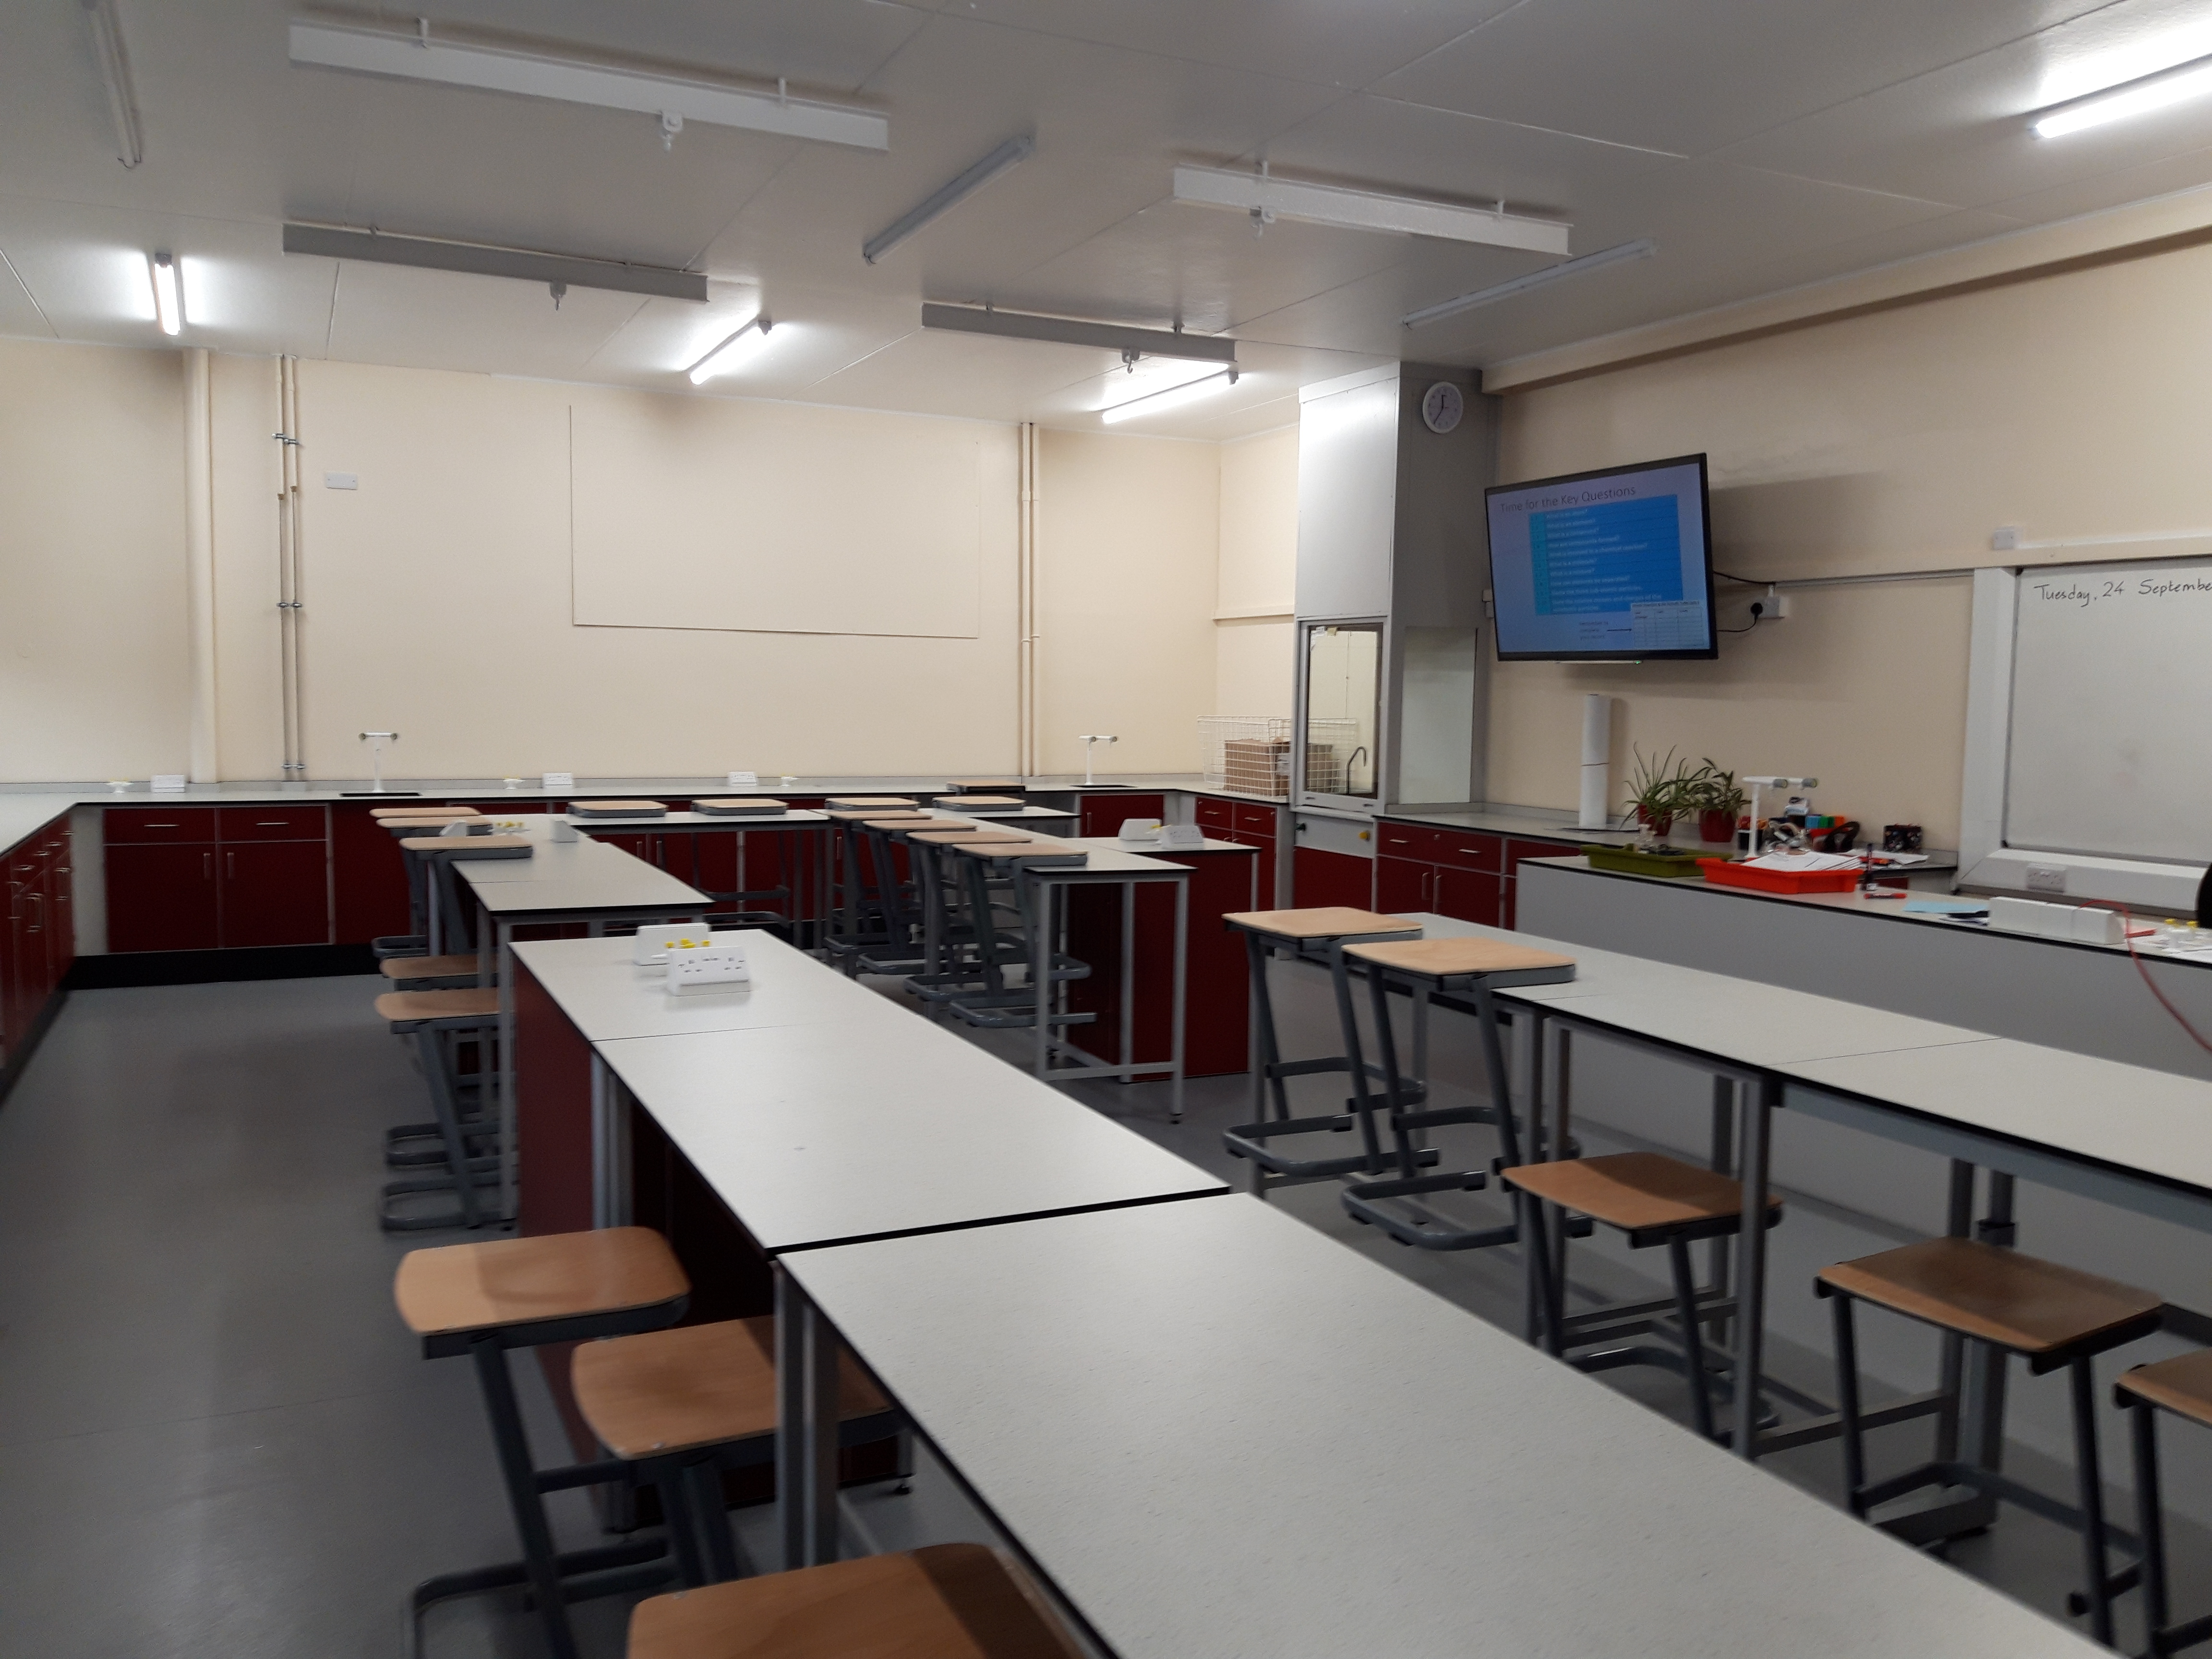 Science Classroom refurbishment - After